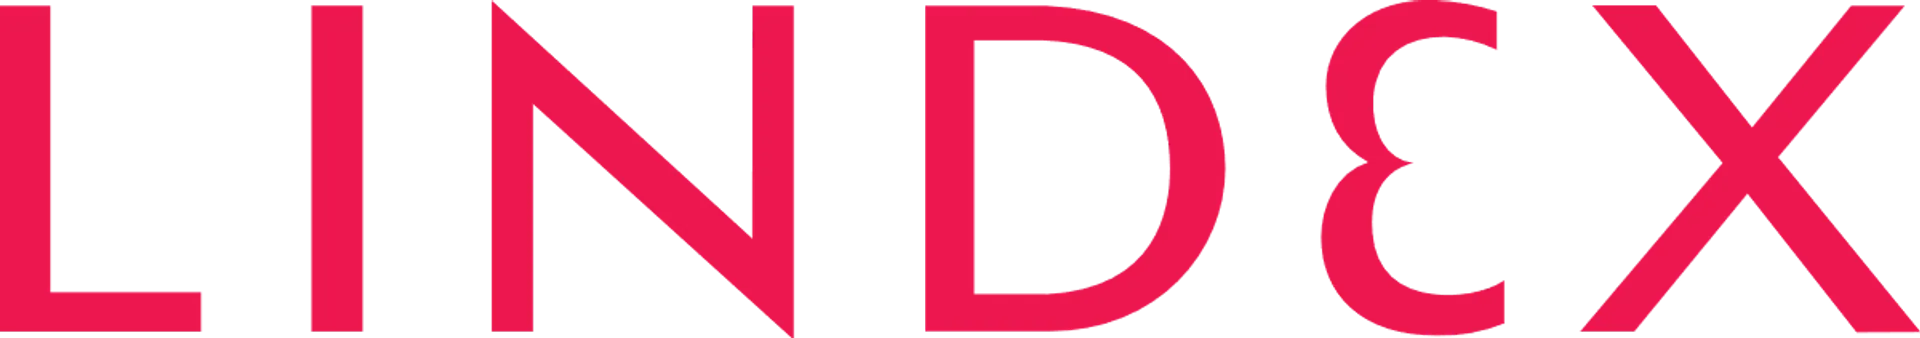 LINDEX logo of current catalogue